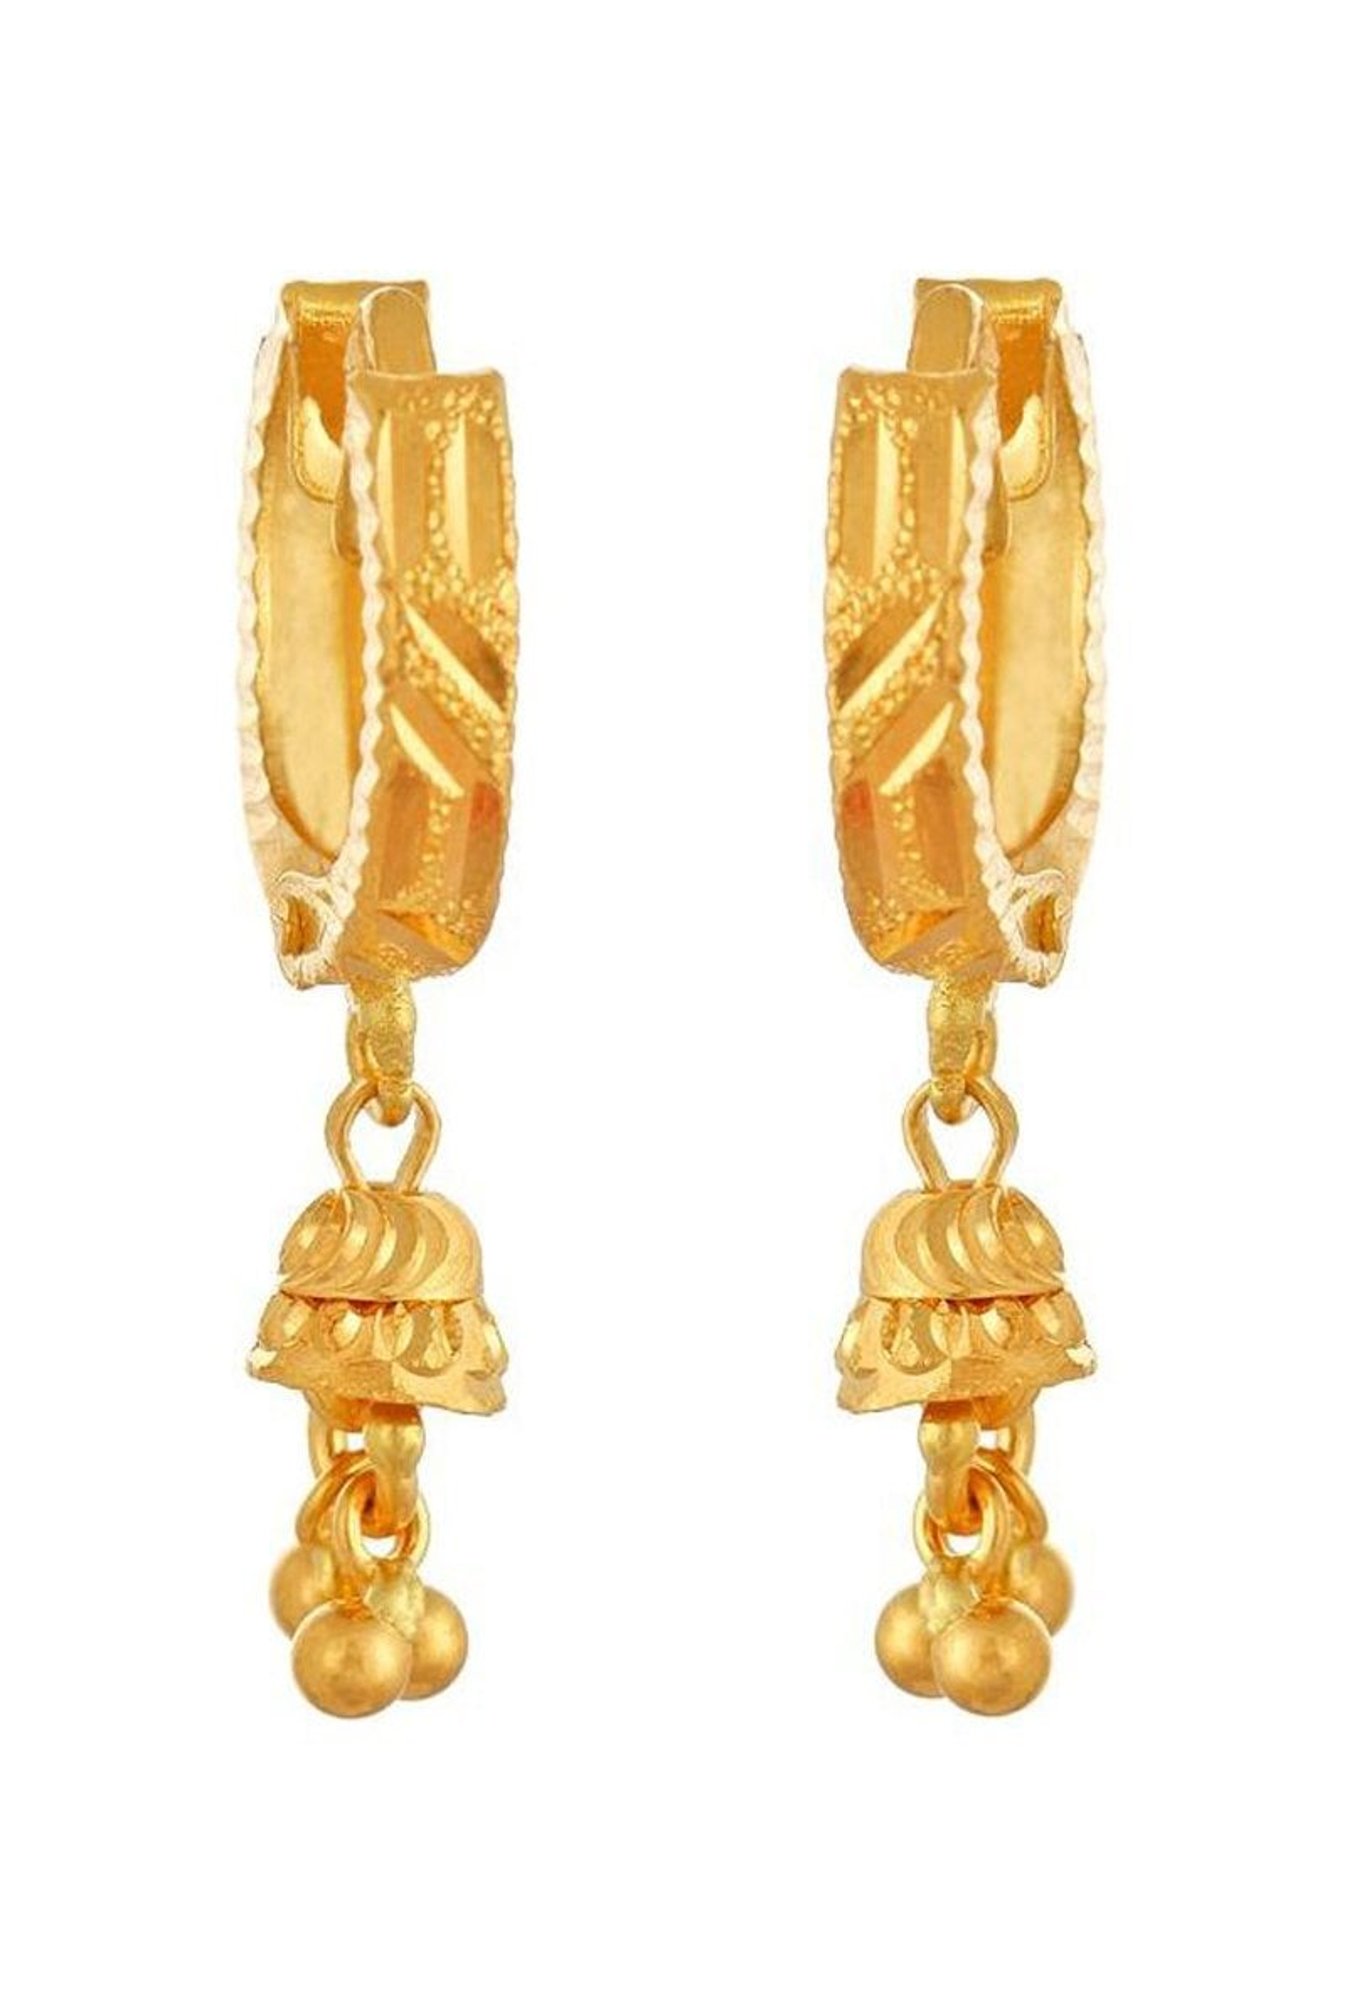 Mia by Tanishq 14k (585) Yellow Gold Stud Earrings for Women : Amazon.in:  Fashion